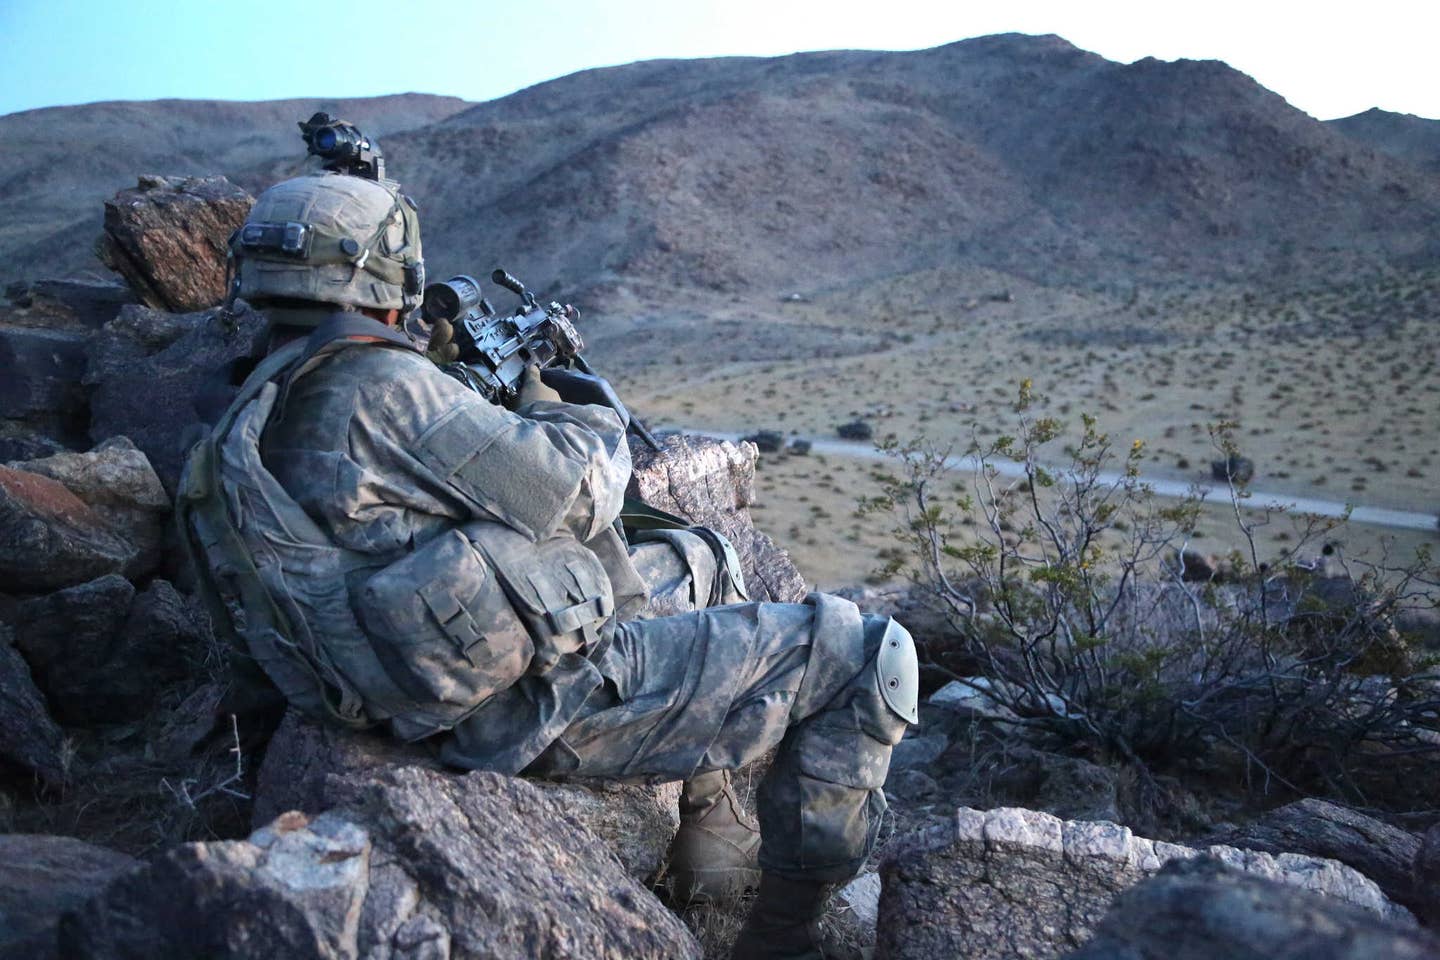 U.S. Army photo by Sgt. Christopher Blanton